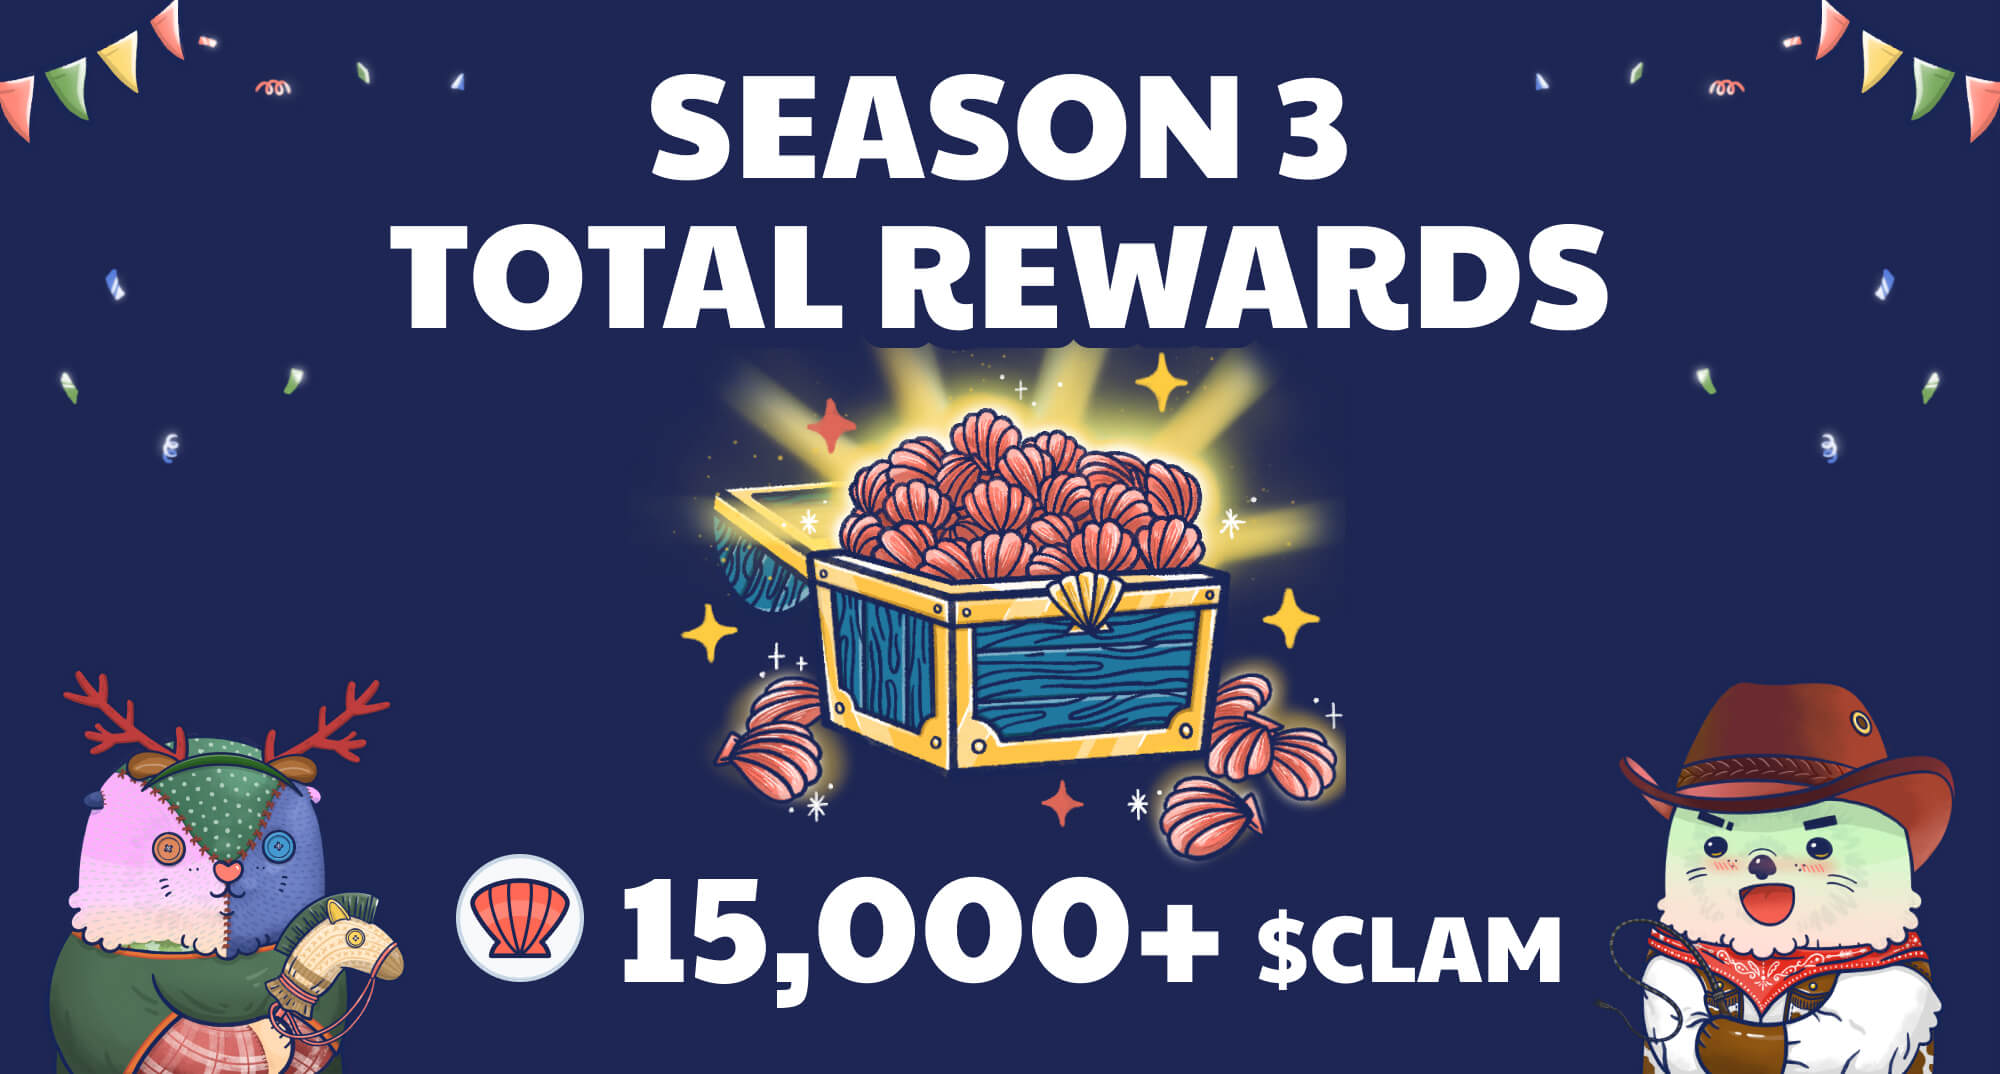 CLAM reward